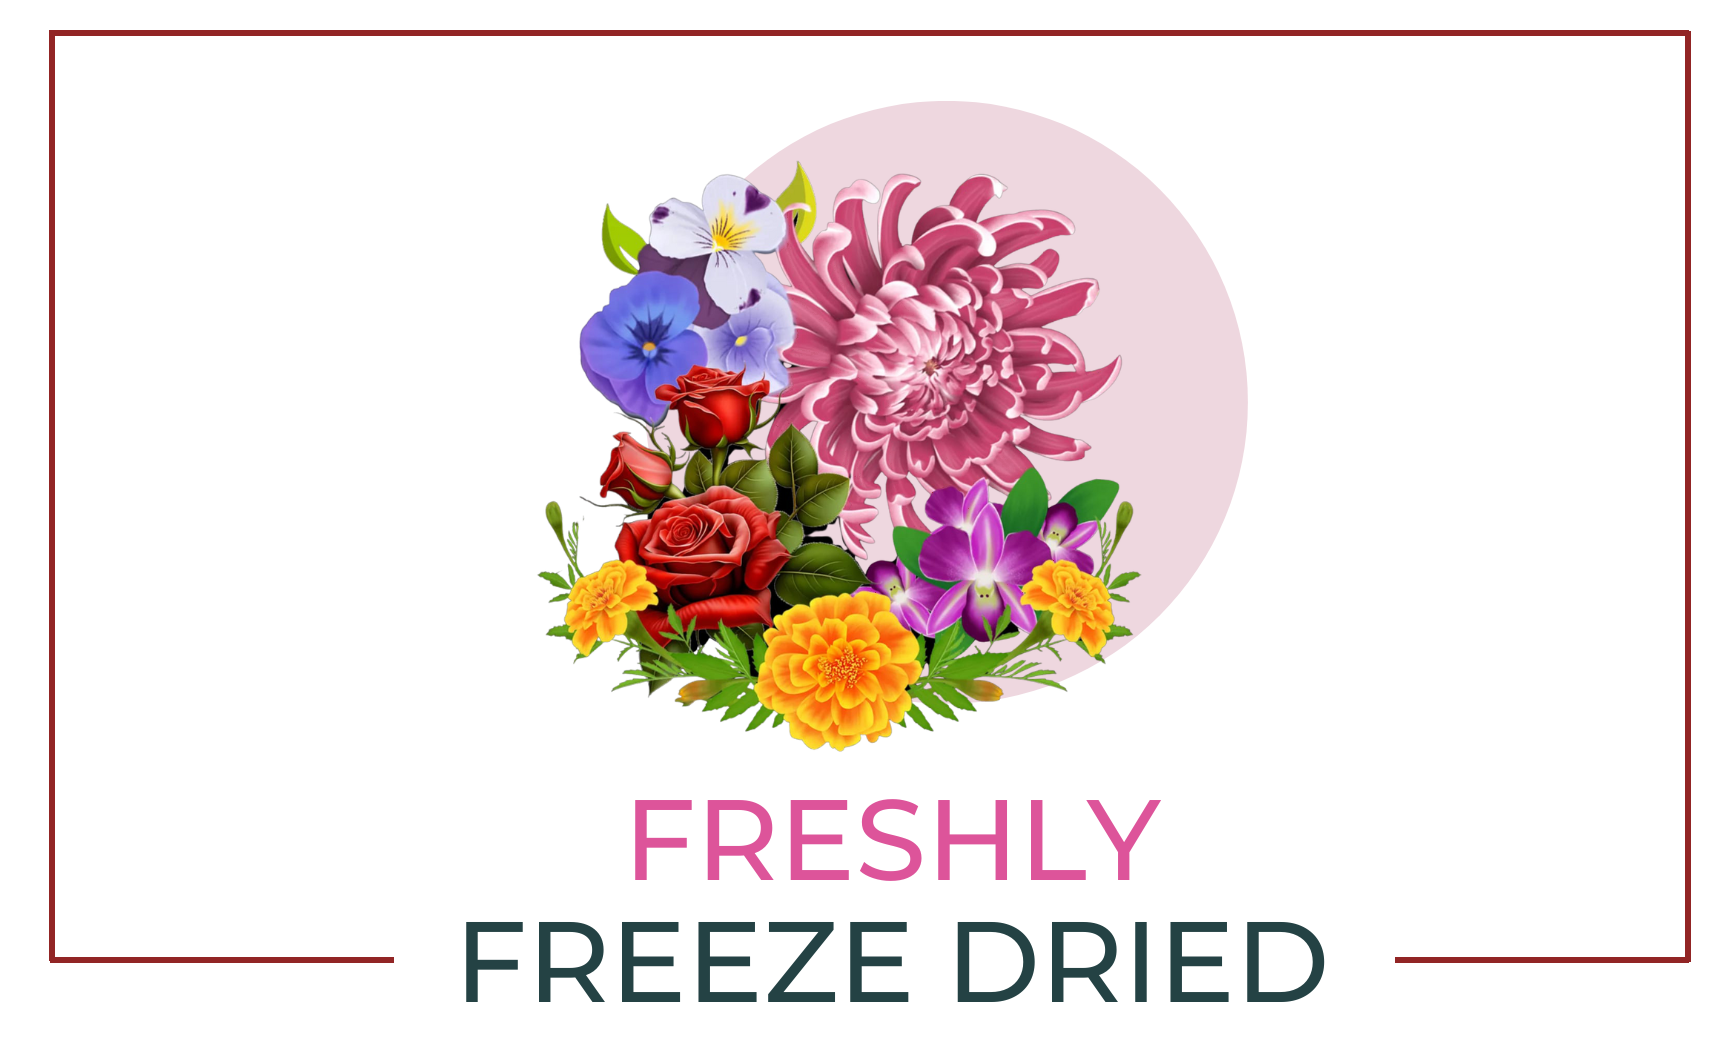 Freshly Freeze Dried Edible Flowers